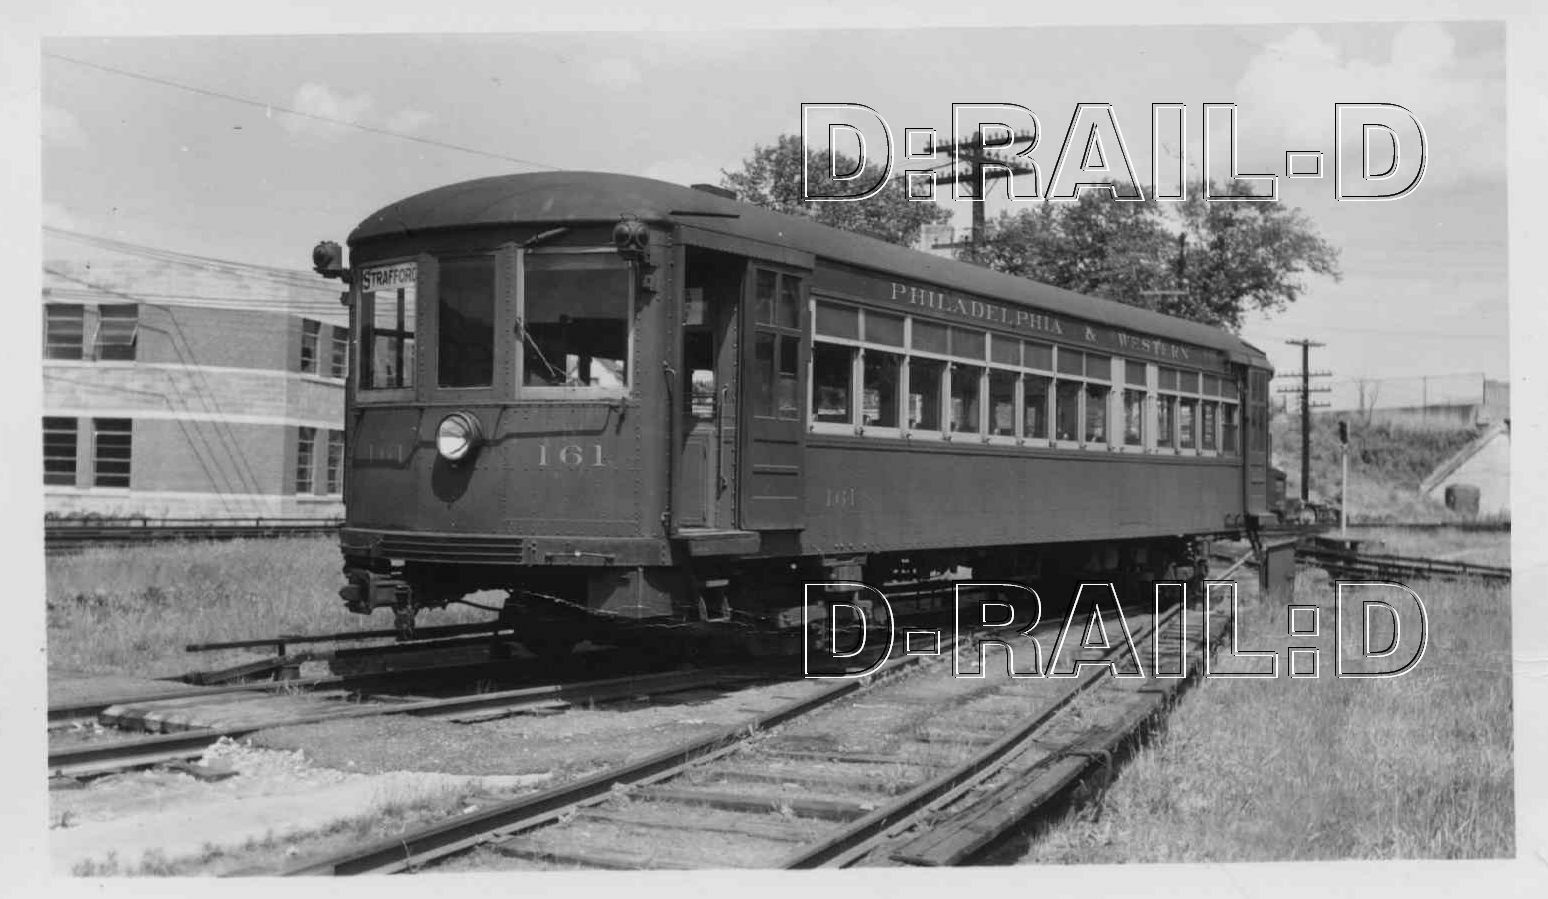 9D548 RP 1940s/50s PHILADELPHIA & WESTERN RAILWAY CAR #161